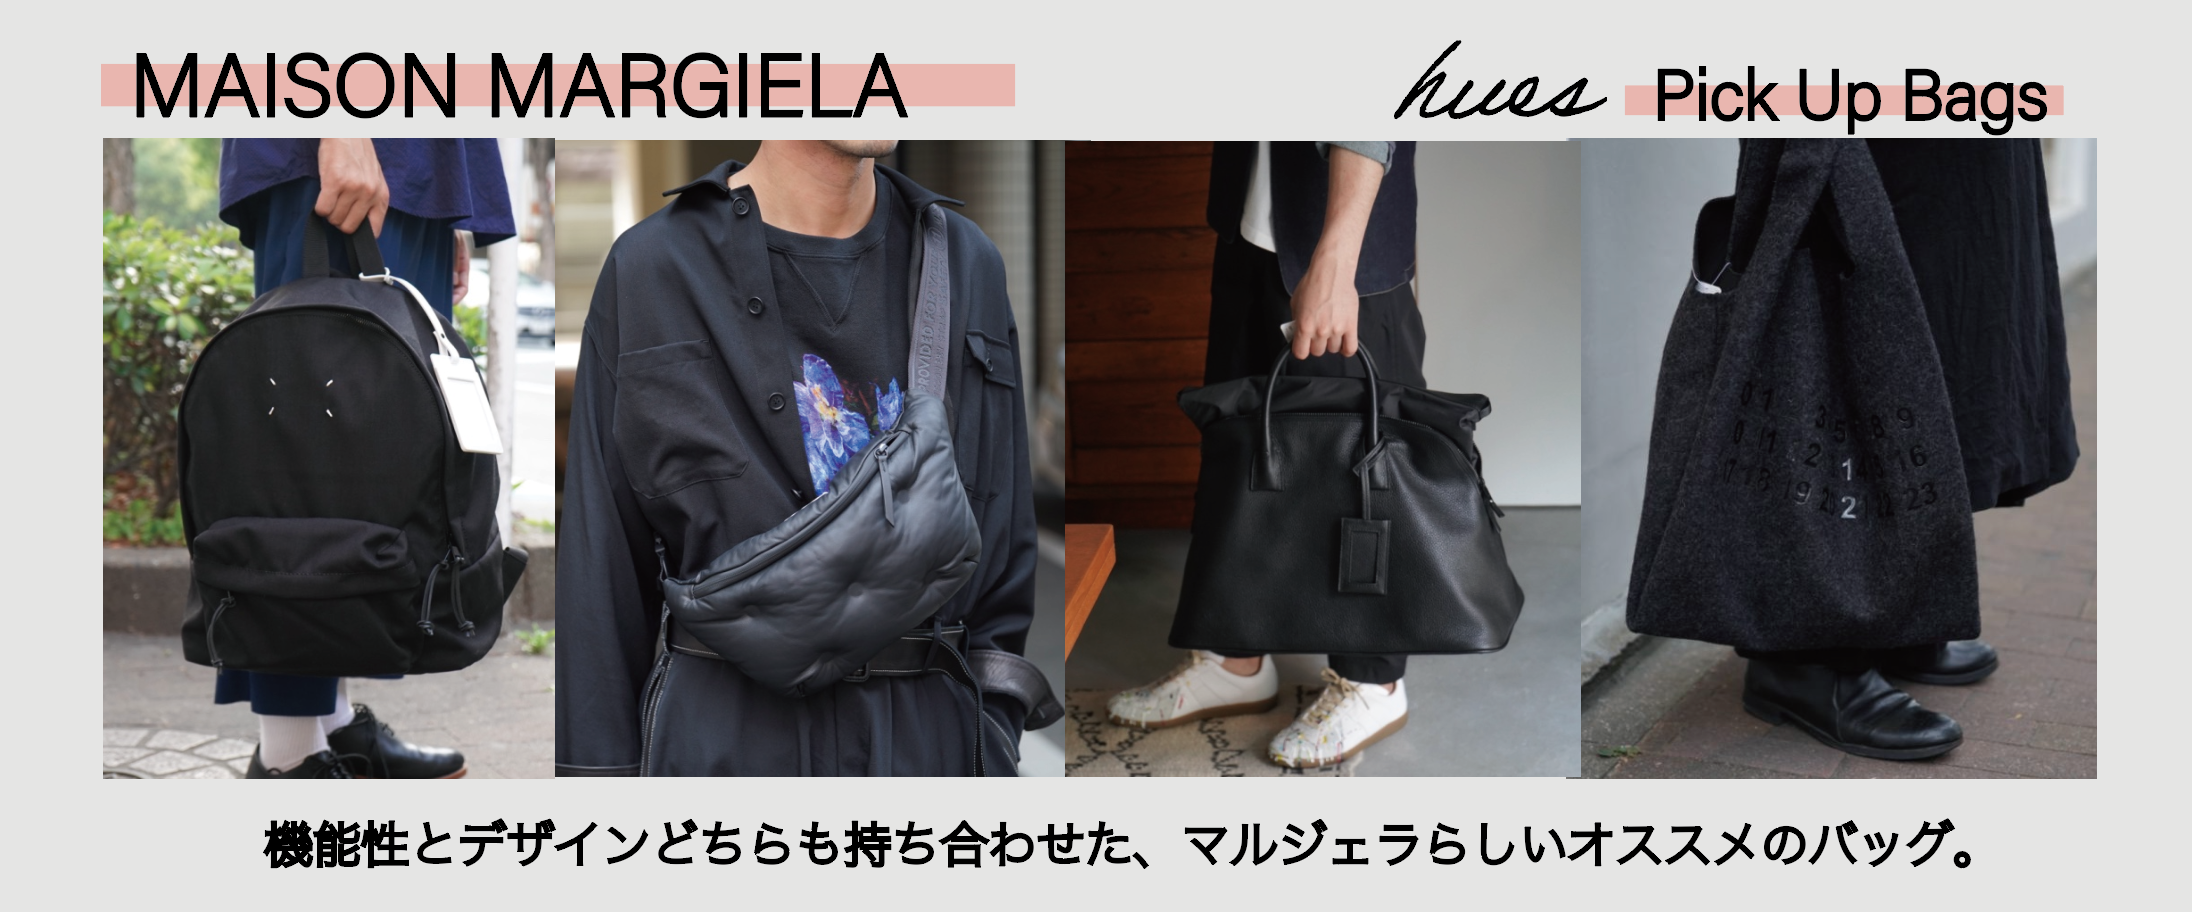 Maison Margiela  Pick Up Bags